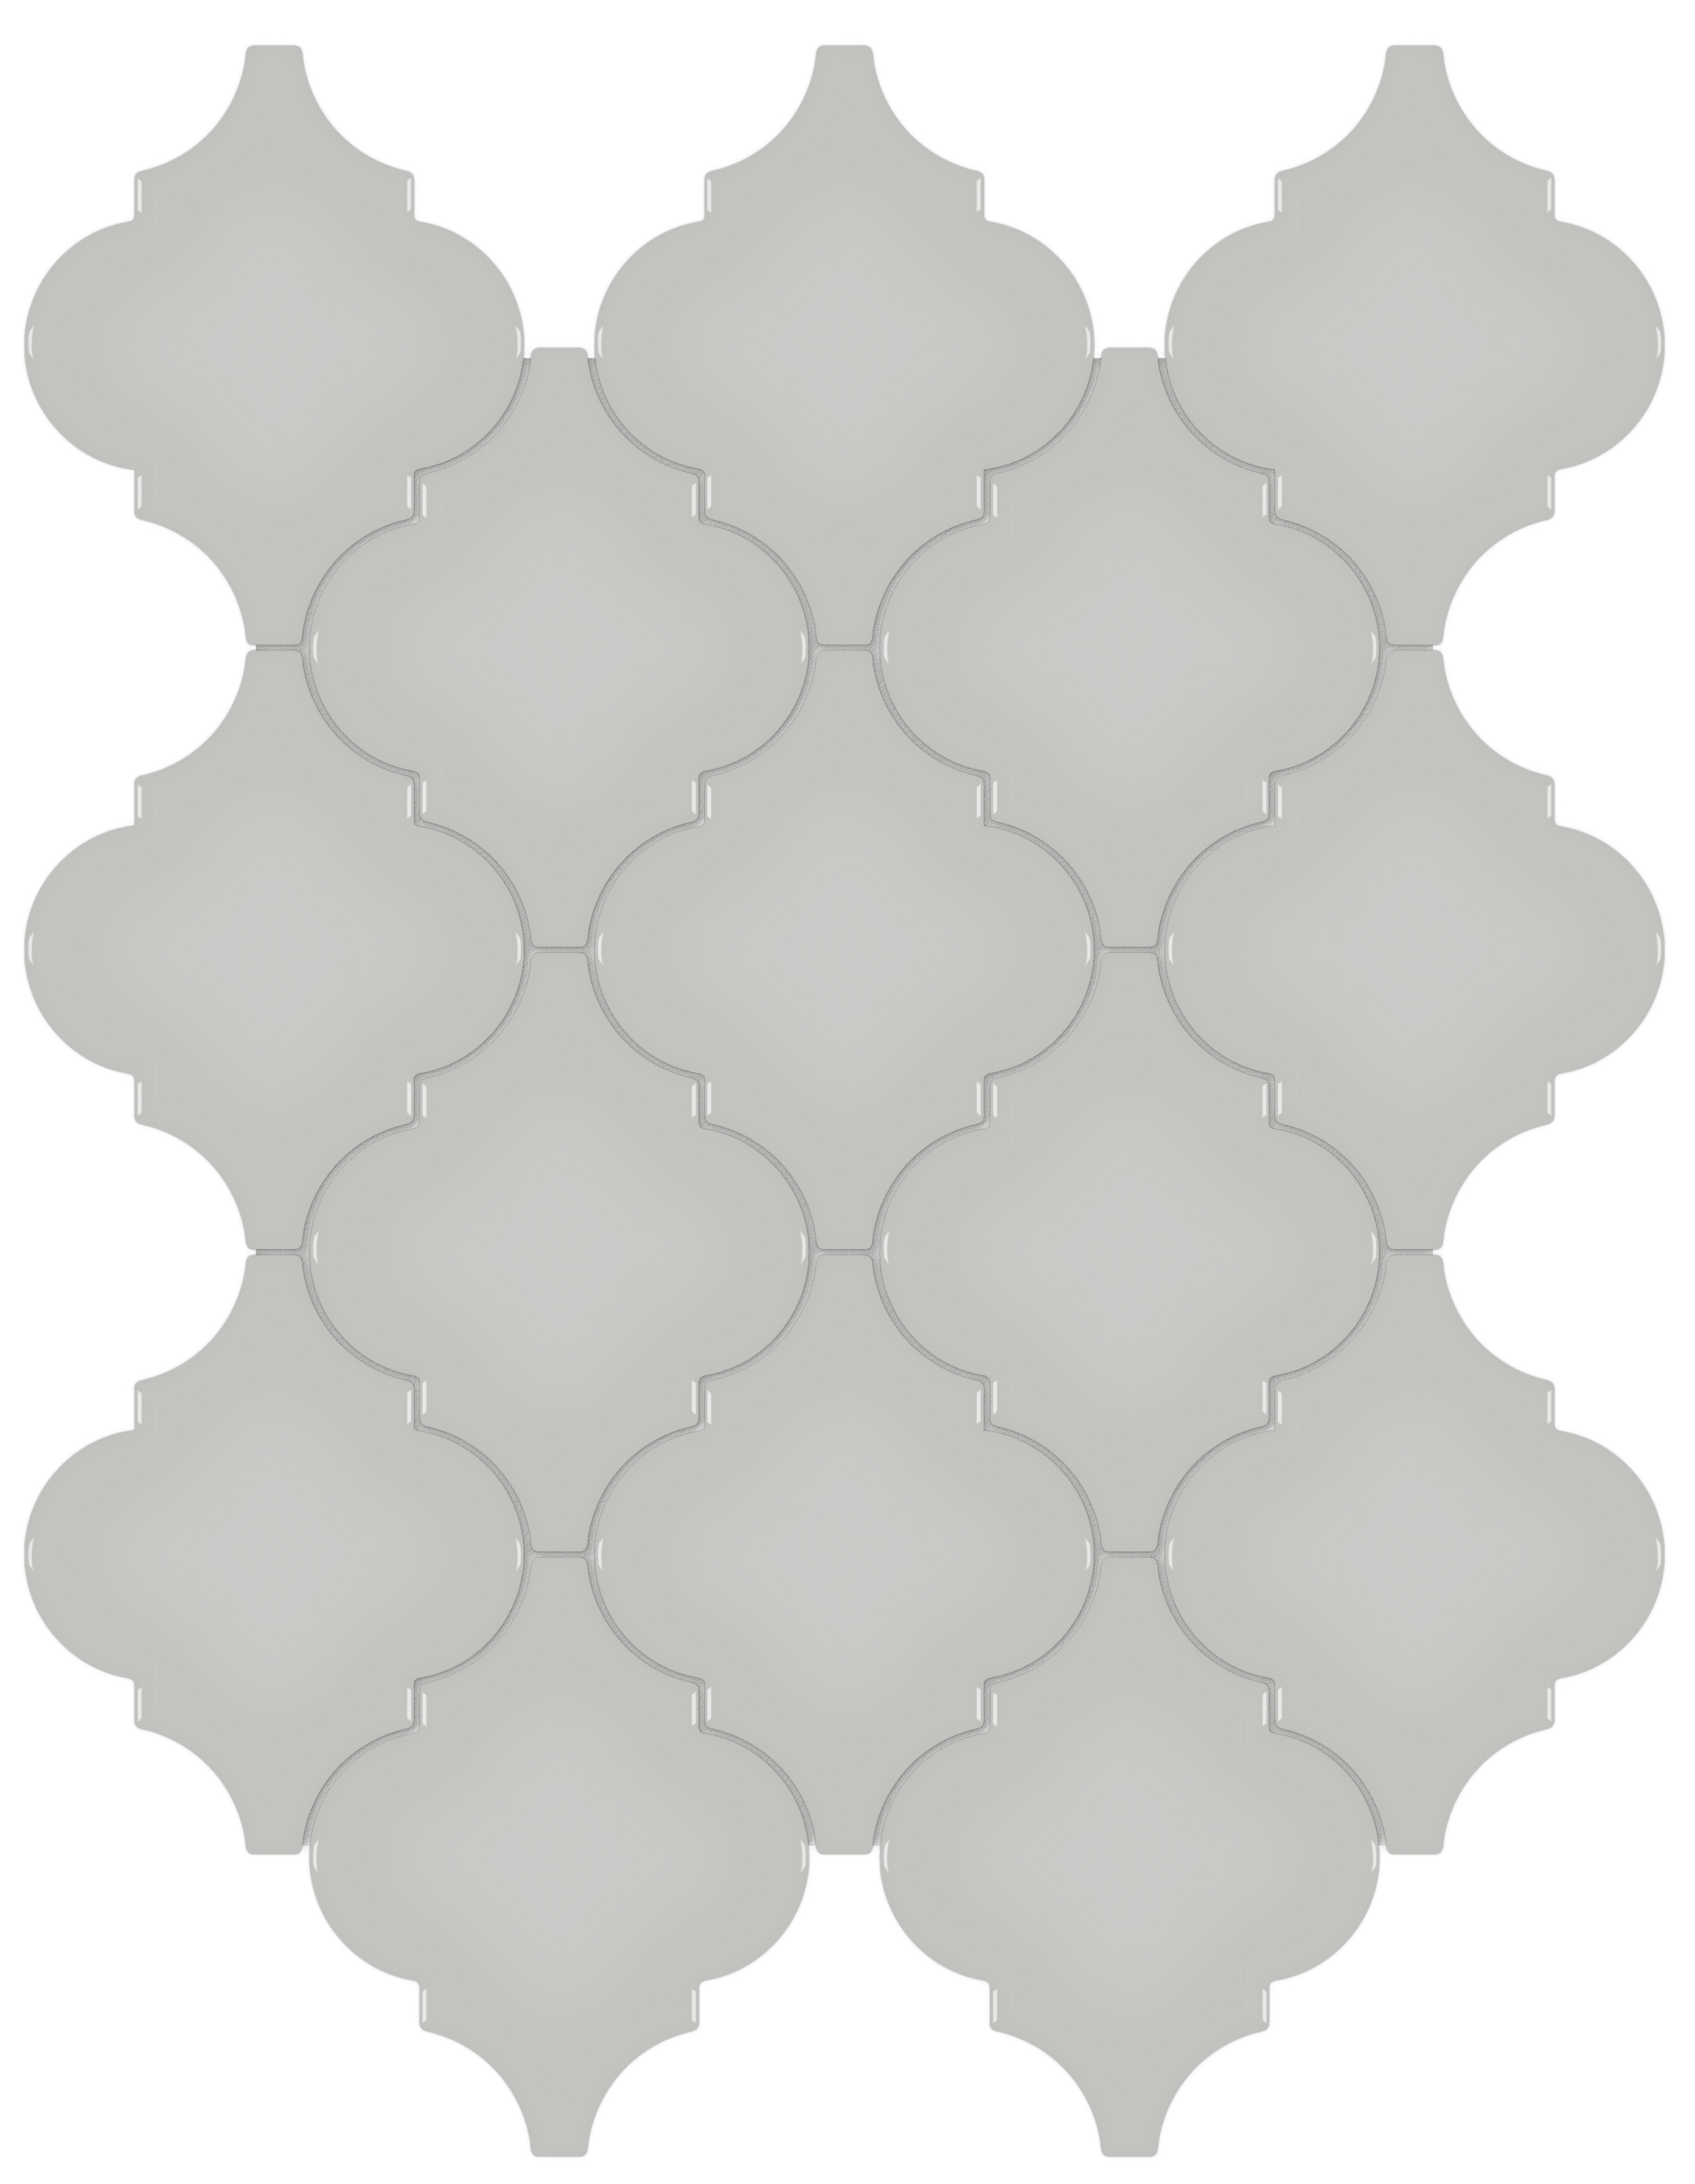 loft grey arabesque pattern glazed porcelain mosaic from soho anatolia collection distributed by surface group international glossy finish pressed edge mesh shape